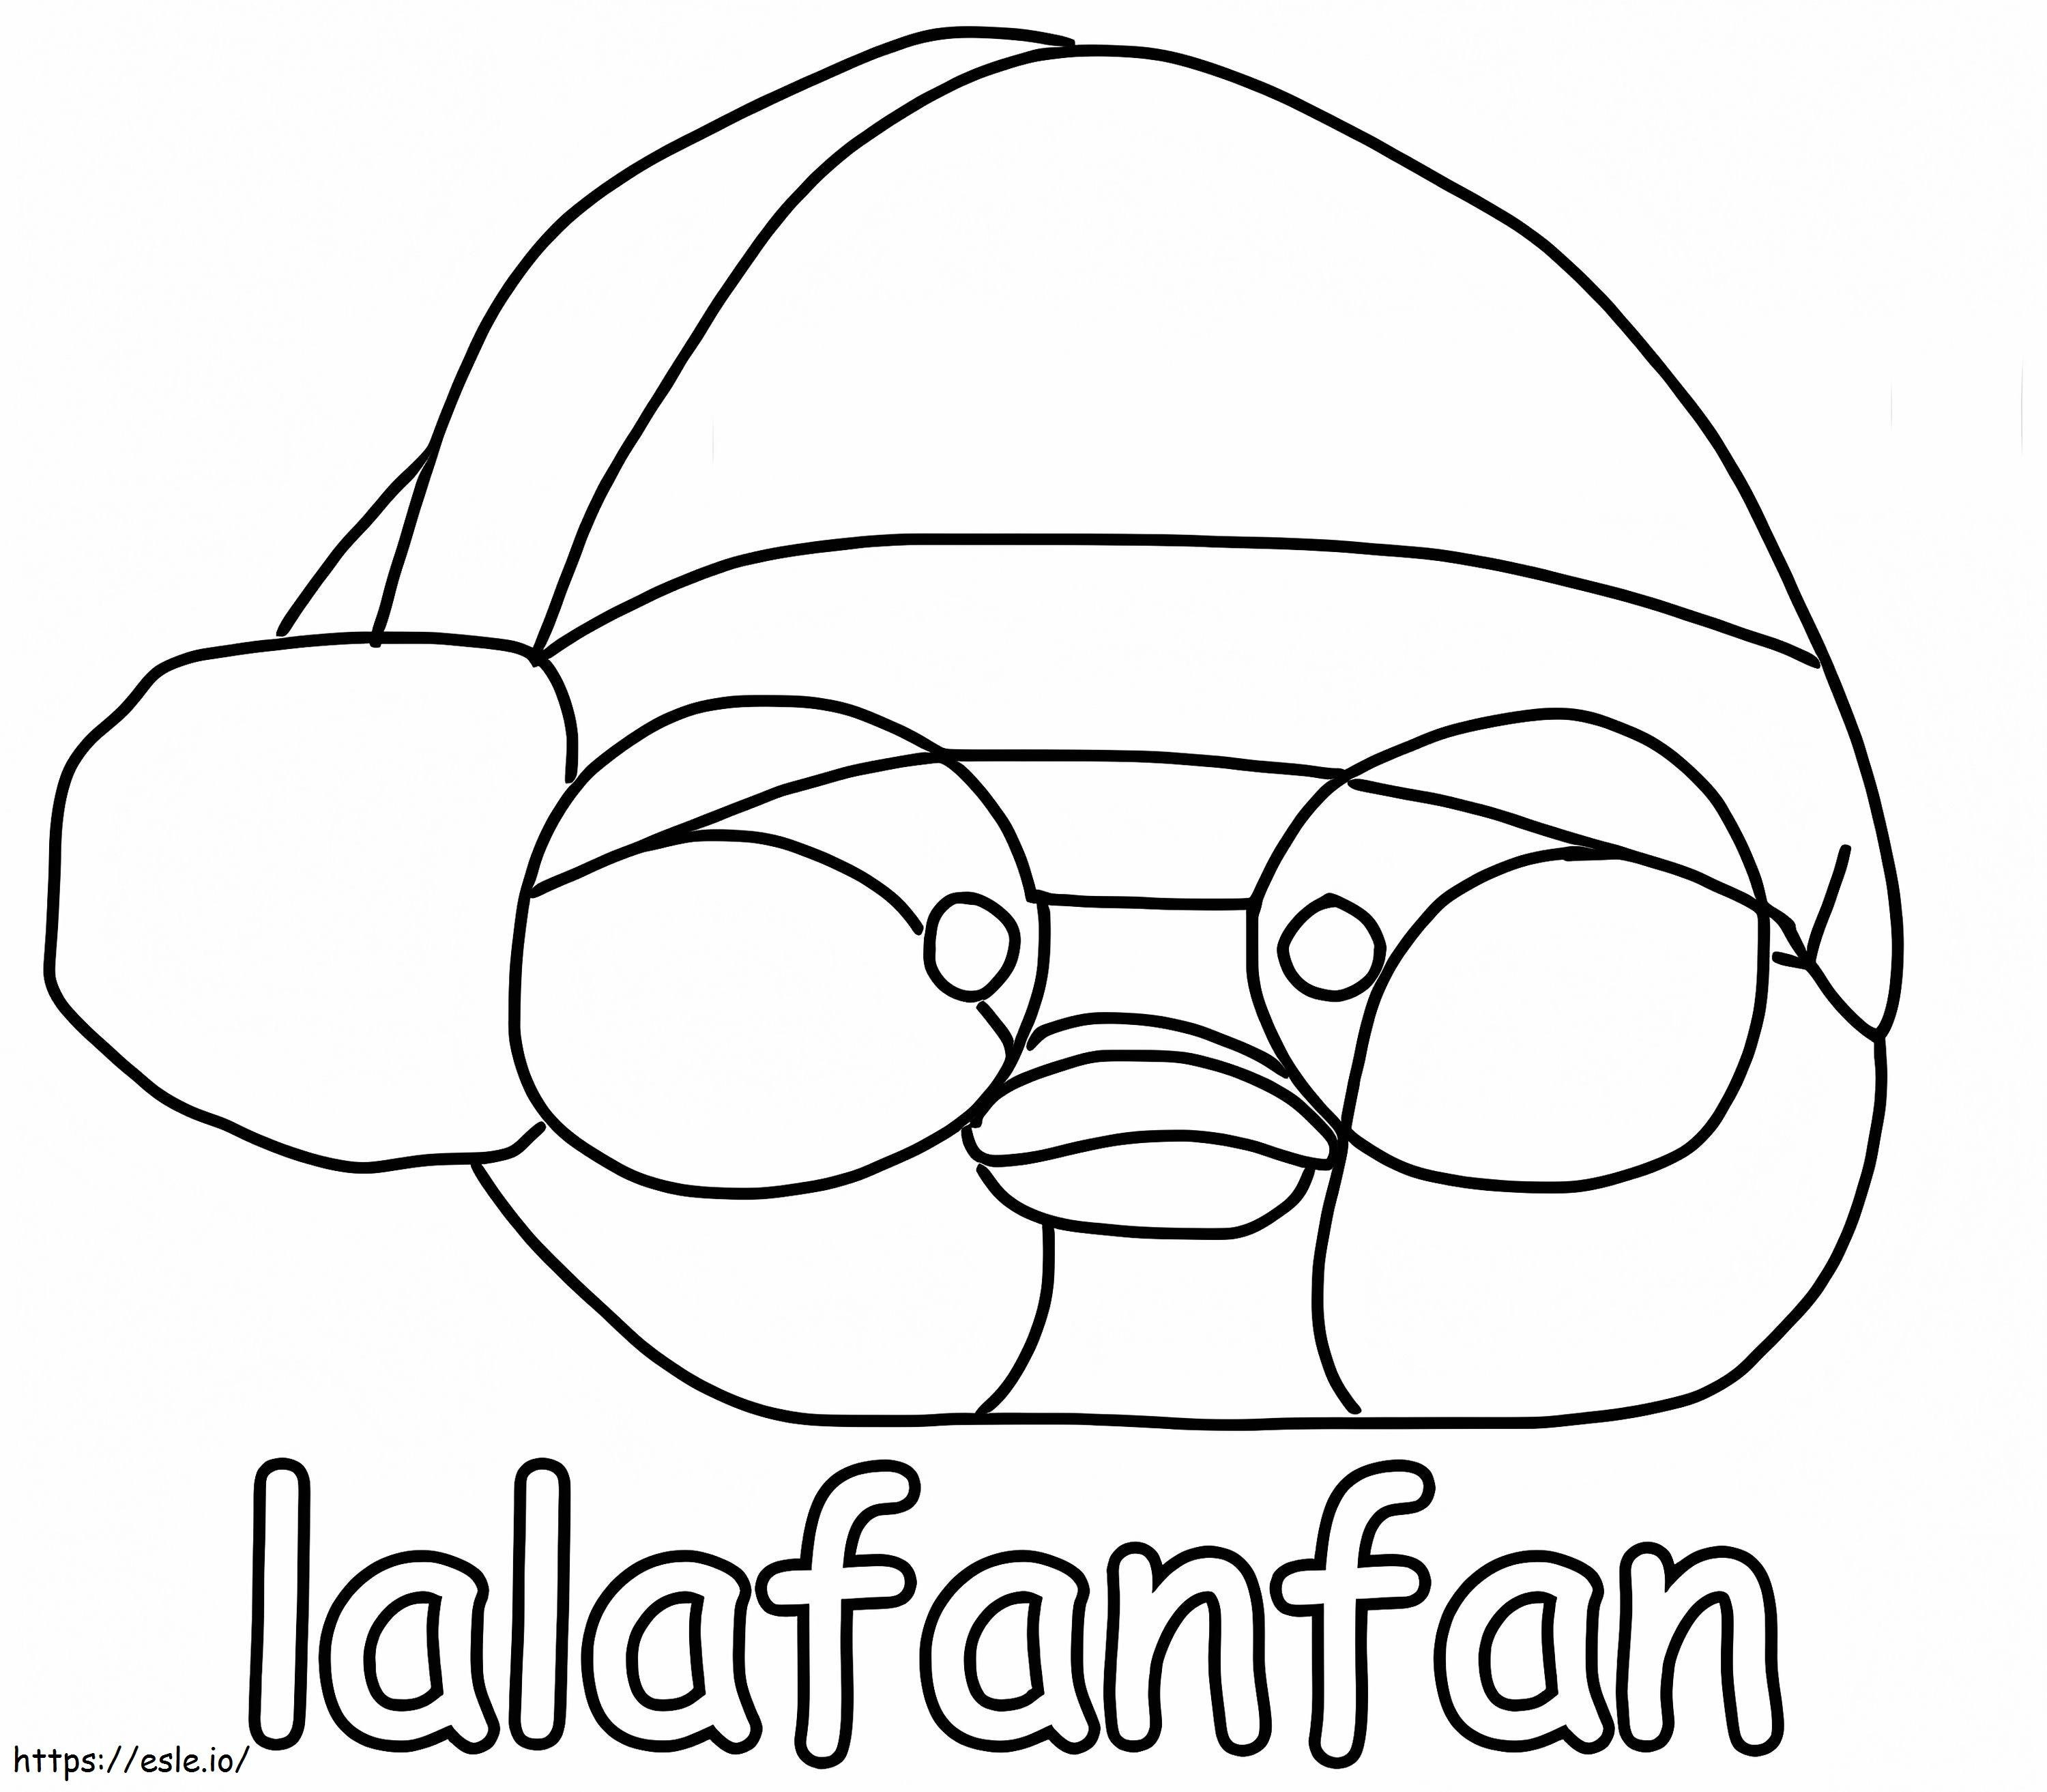 Gratis Lalafanfan kleurplaat kleurplaat